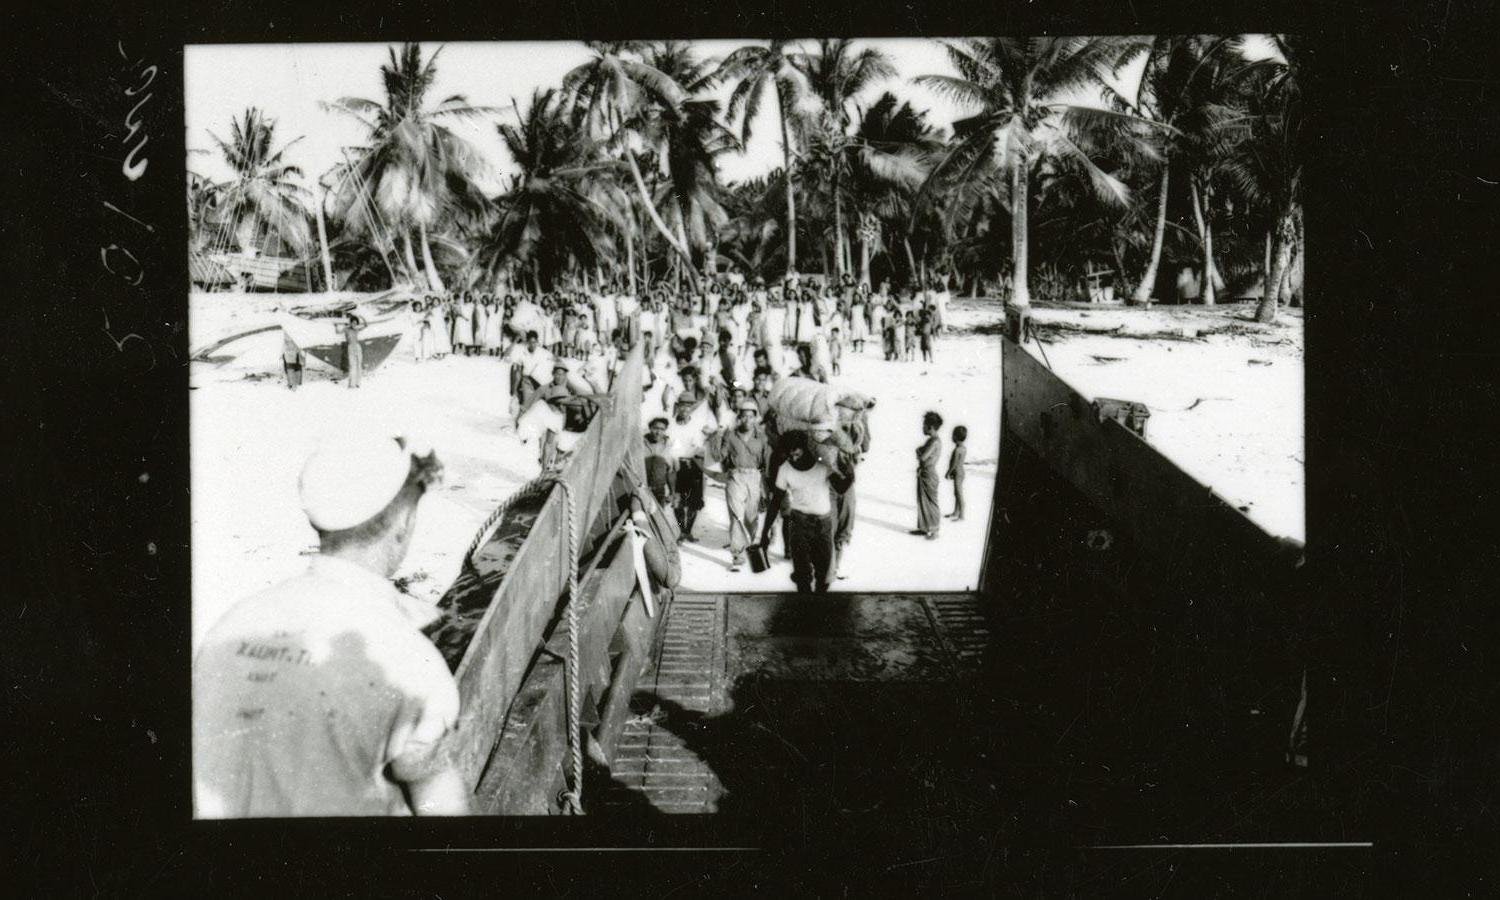 Residents of Bikini Atoll in the Marshall Islands board landing craft